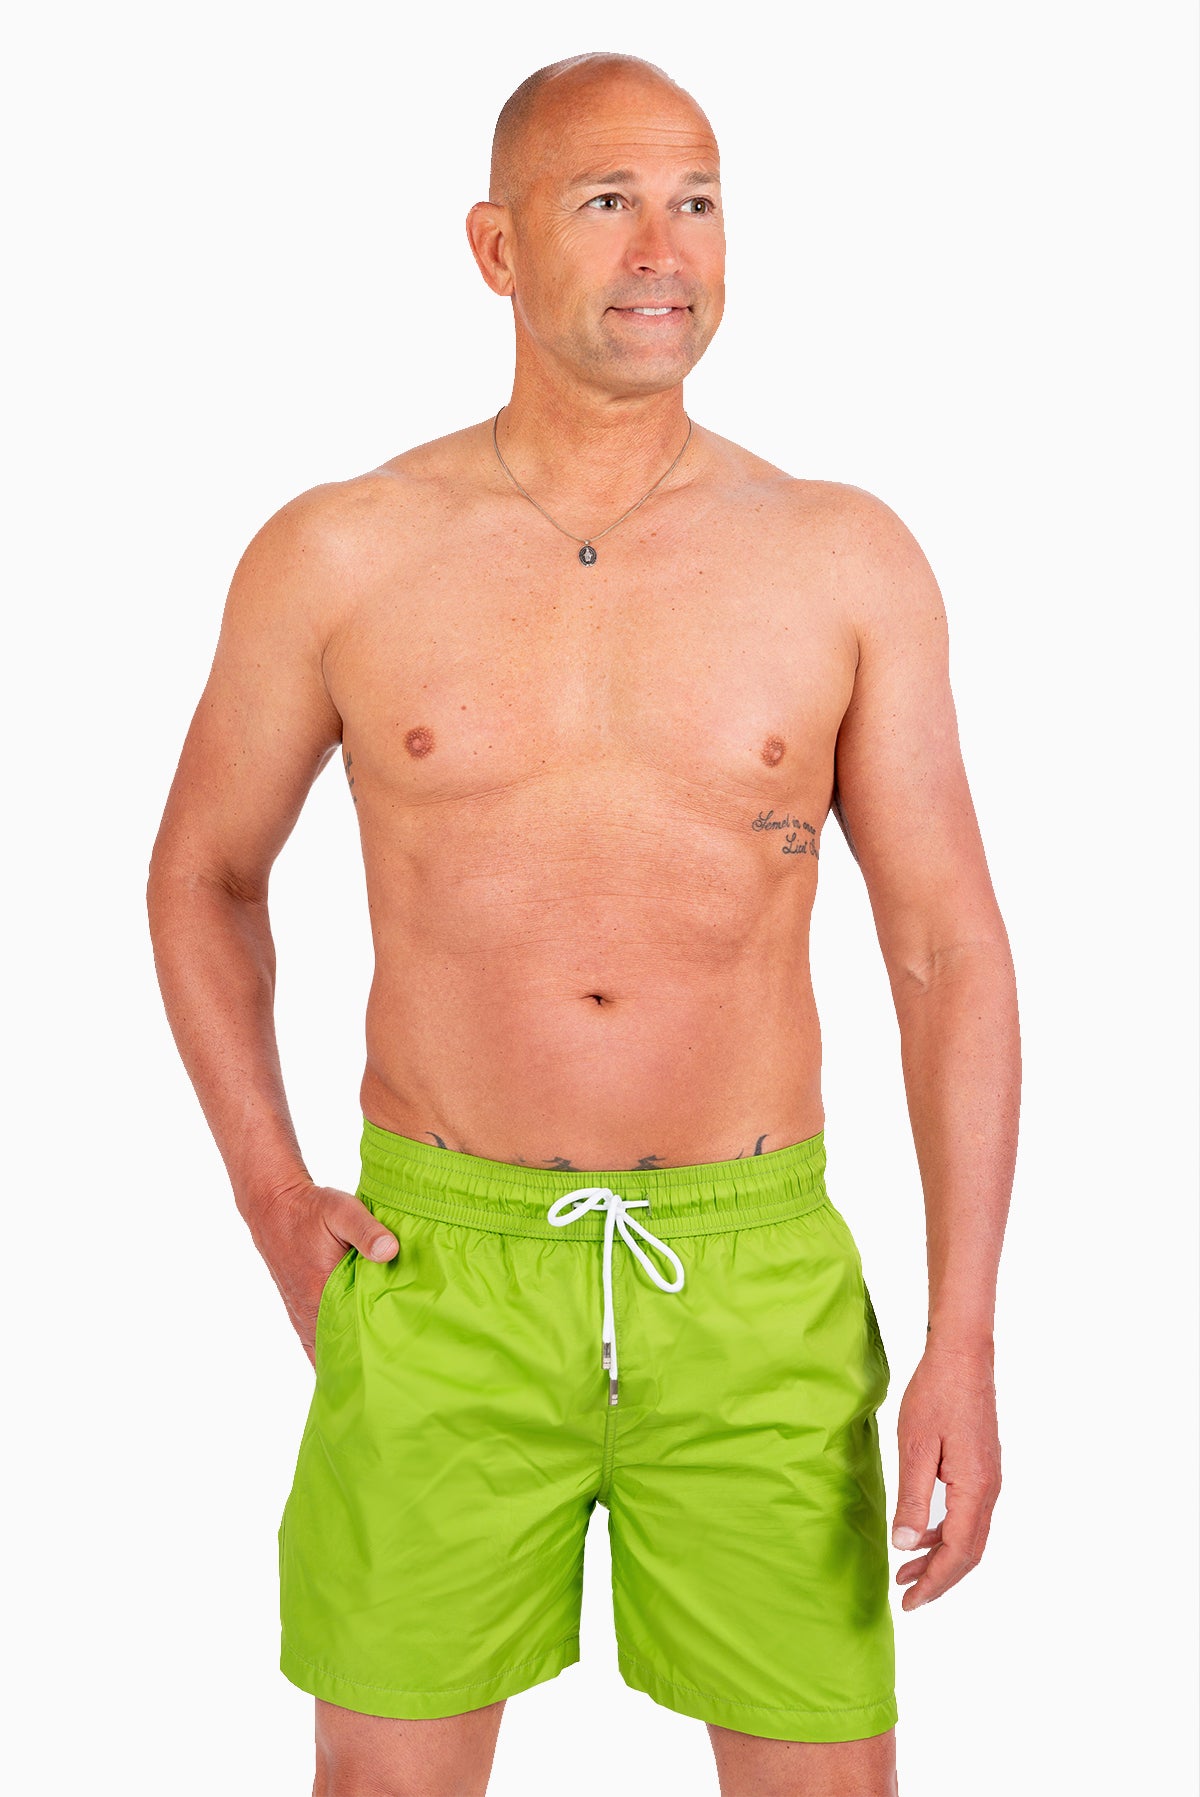 Pantaloncino Uomo - Verde Lime